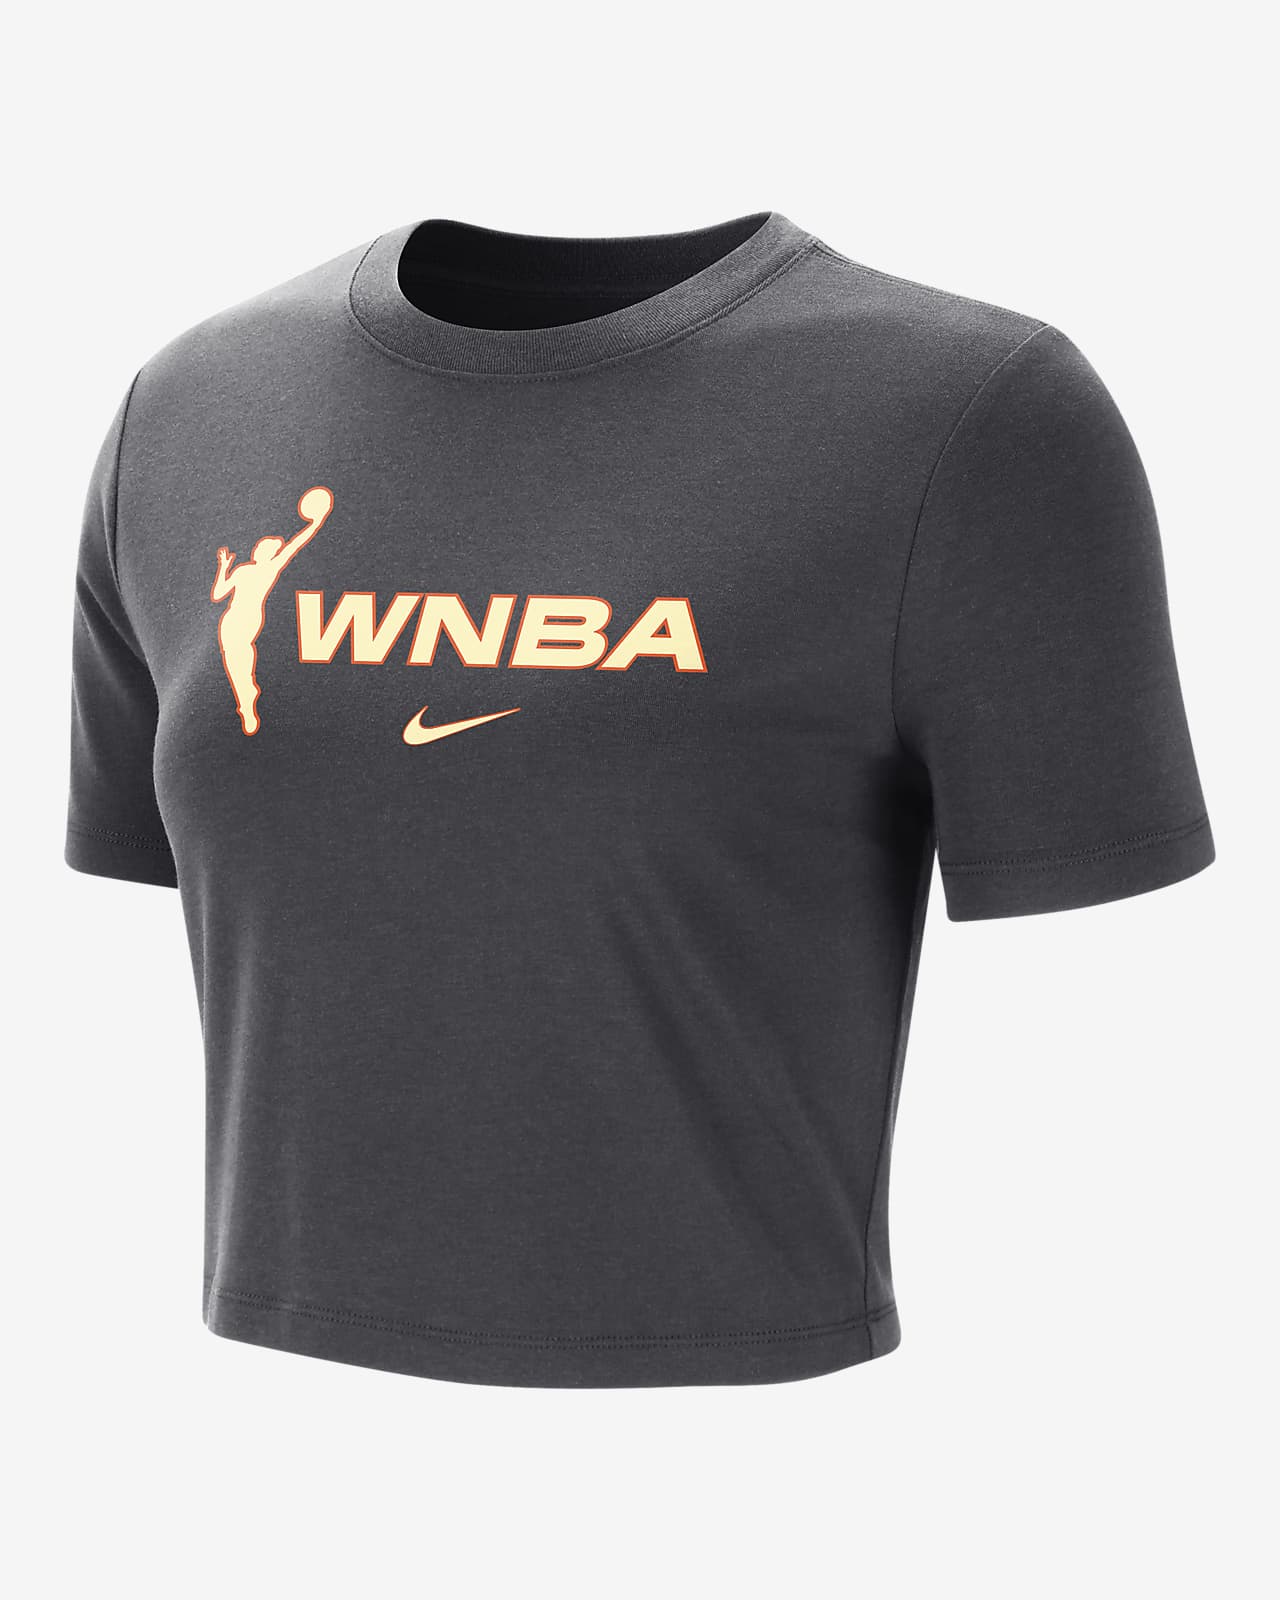 Playera cropped Nike de la WNBA para mujer Team 13